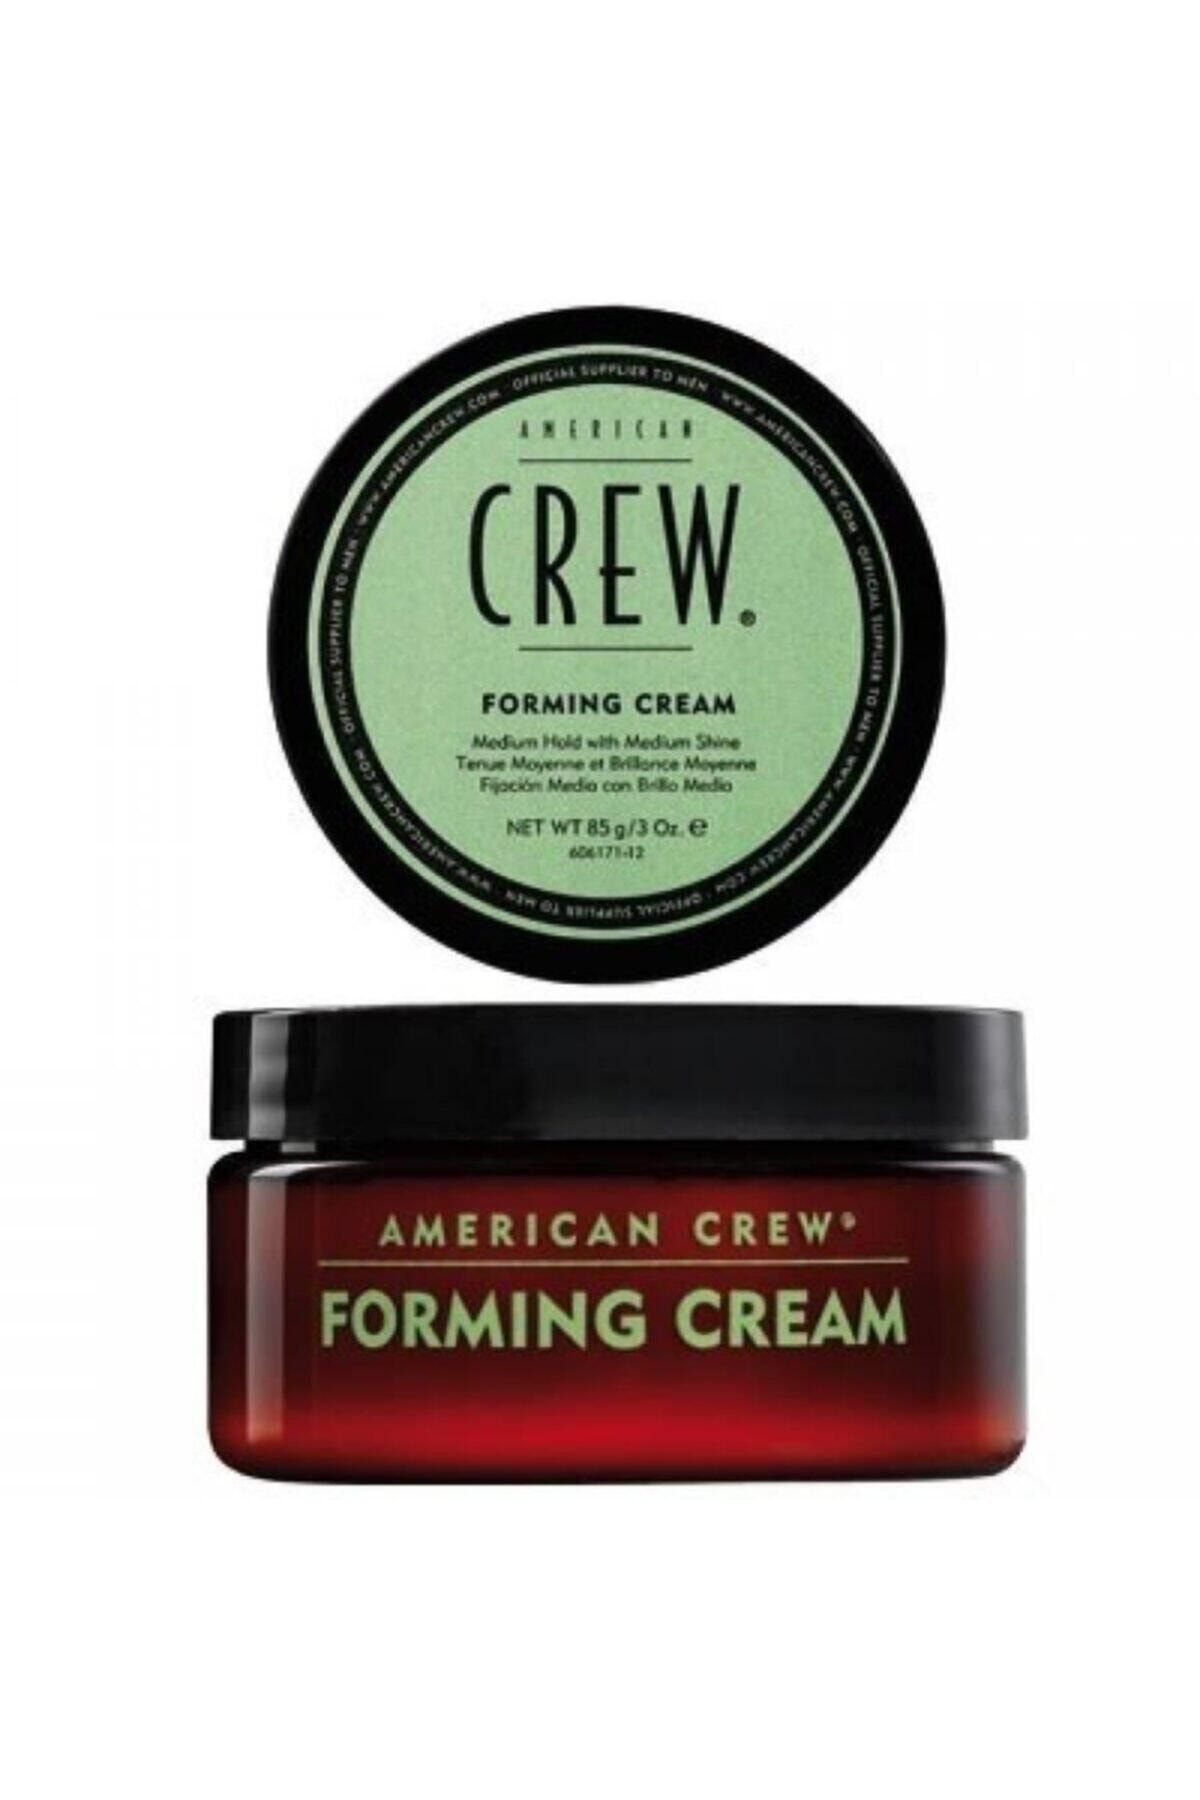 American Crew forming Cream. American Crew forming Cream срок годности. Кремы ahc купить